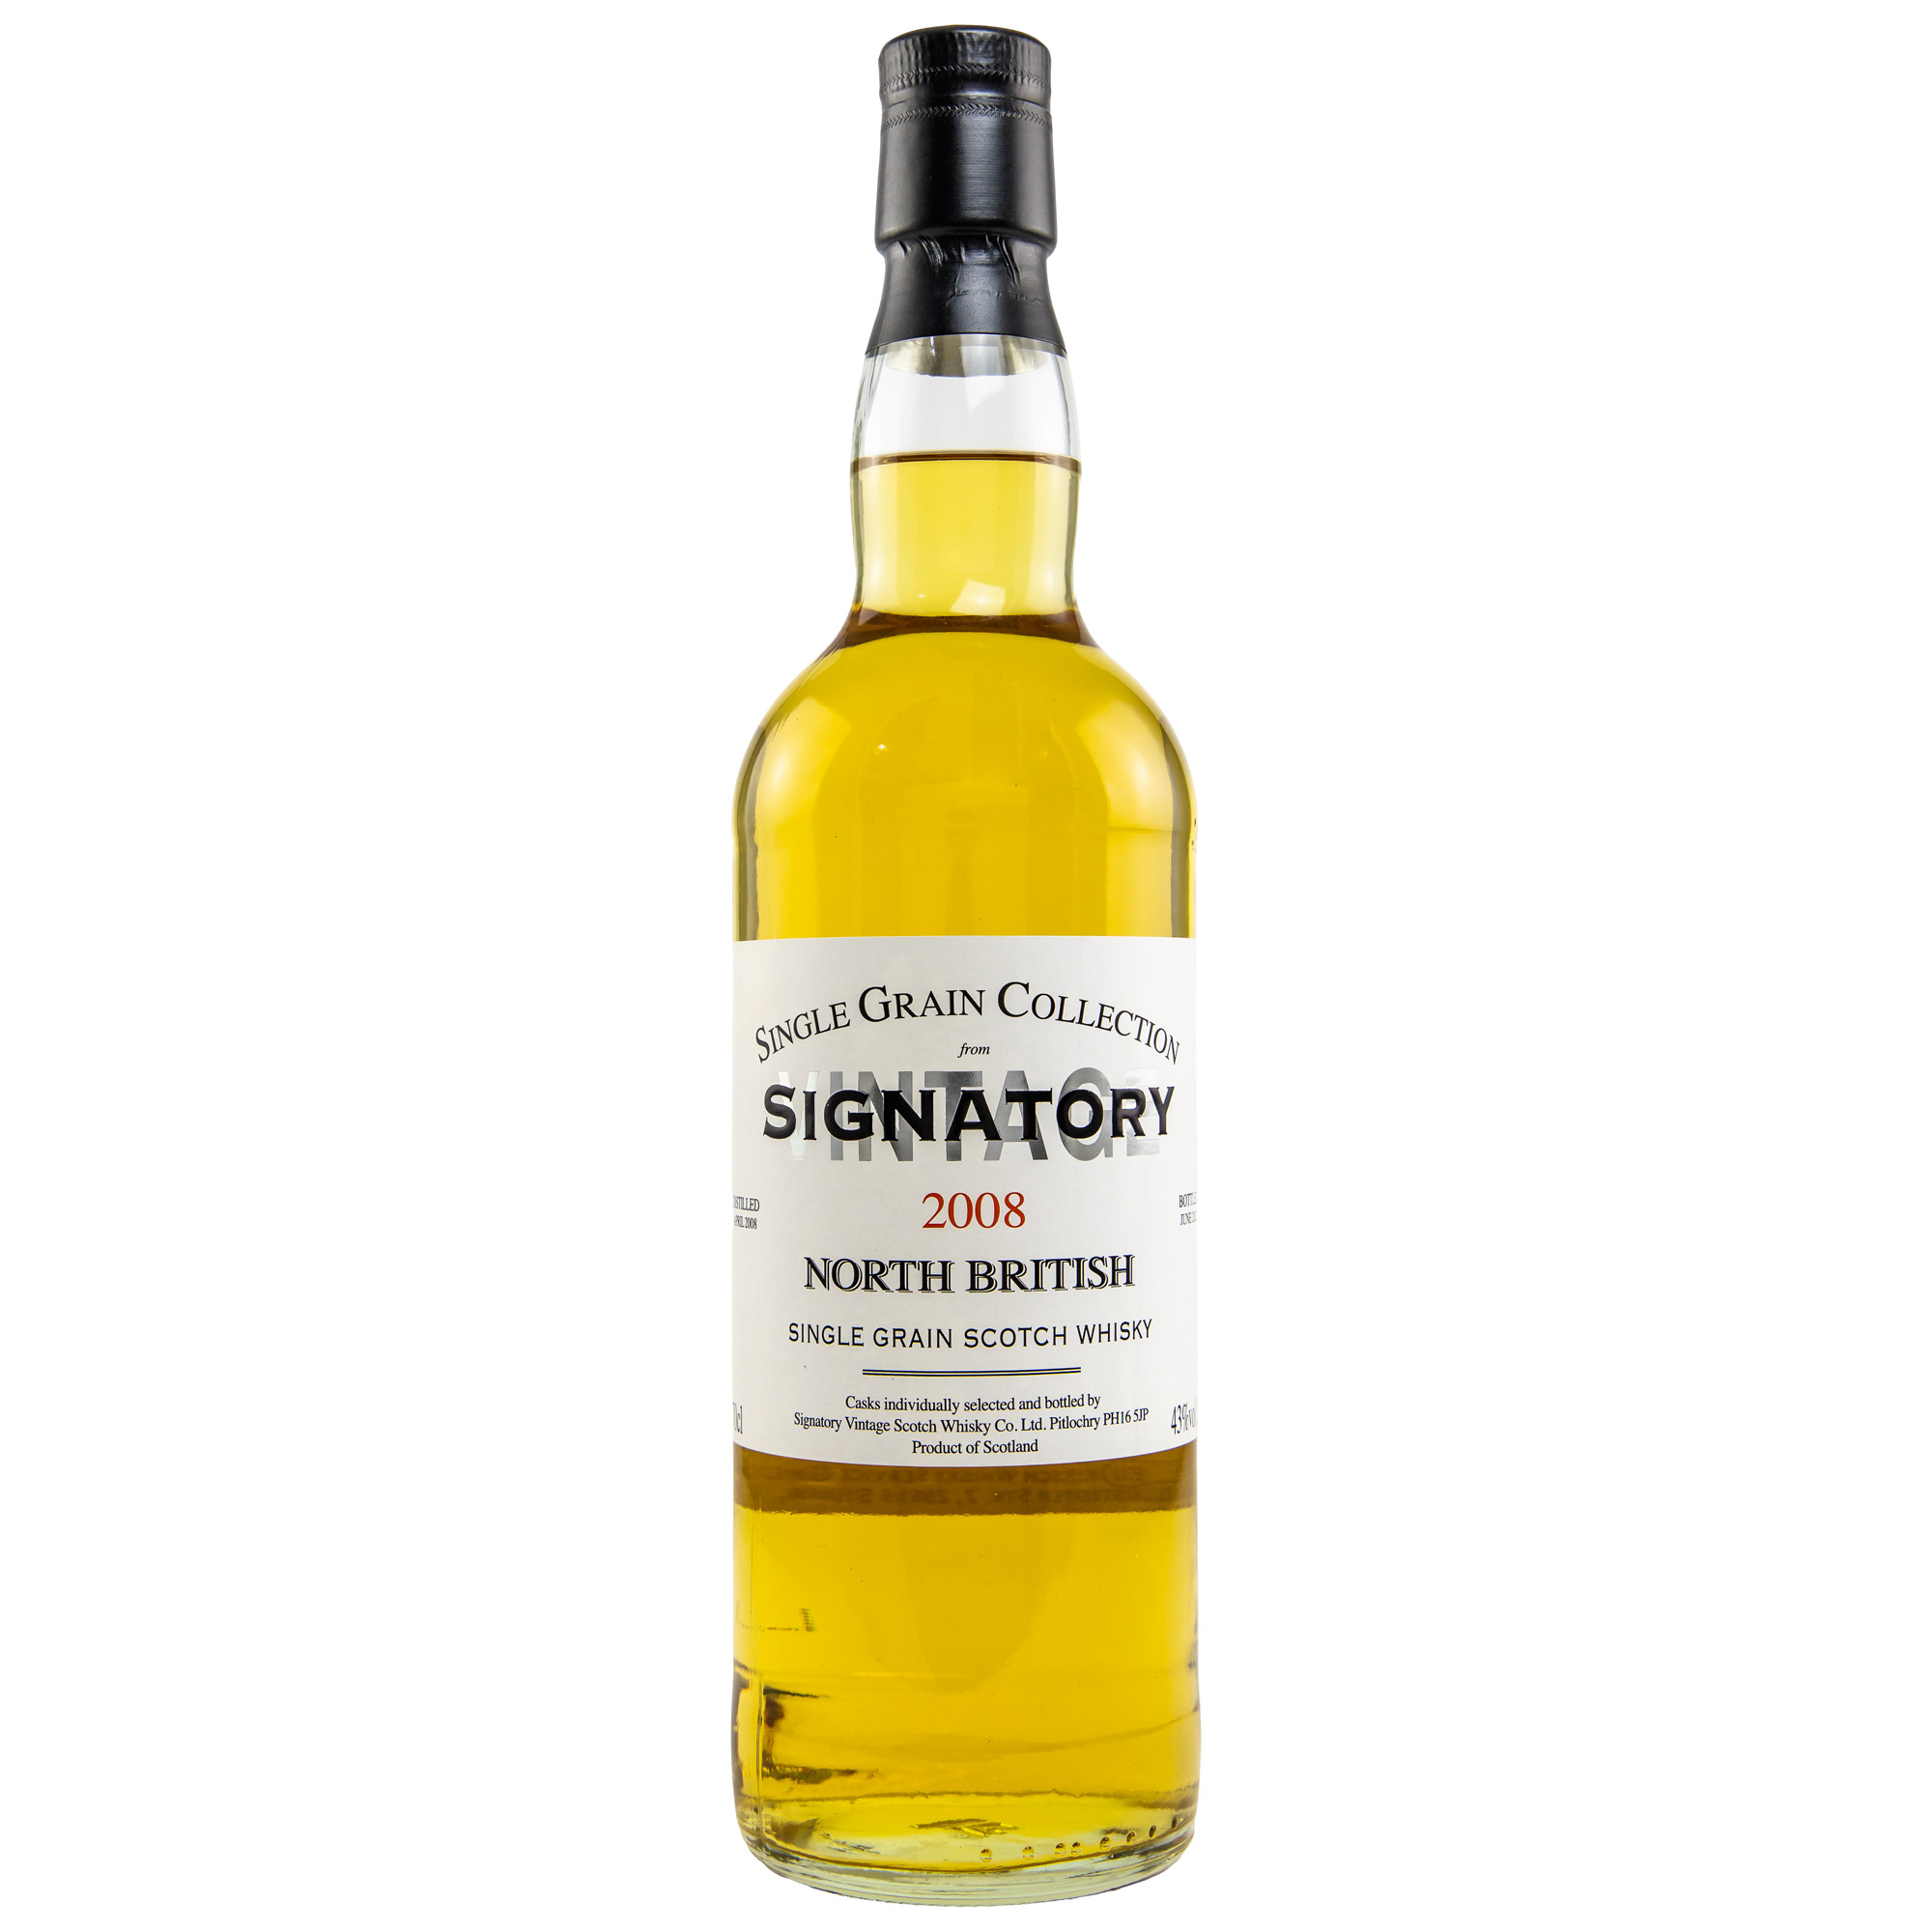 North British 14 Jahre (2008-2022) Single Grain Whisky, 43% 0,7 ltr. Signatory Vintage